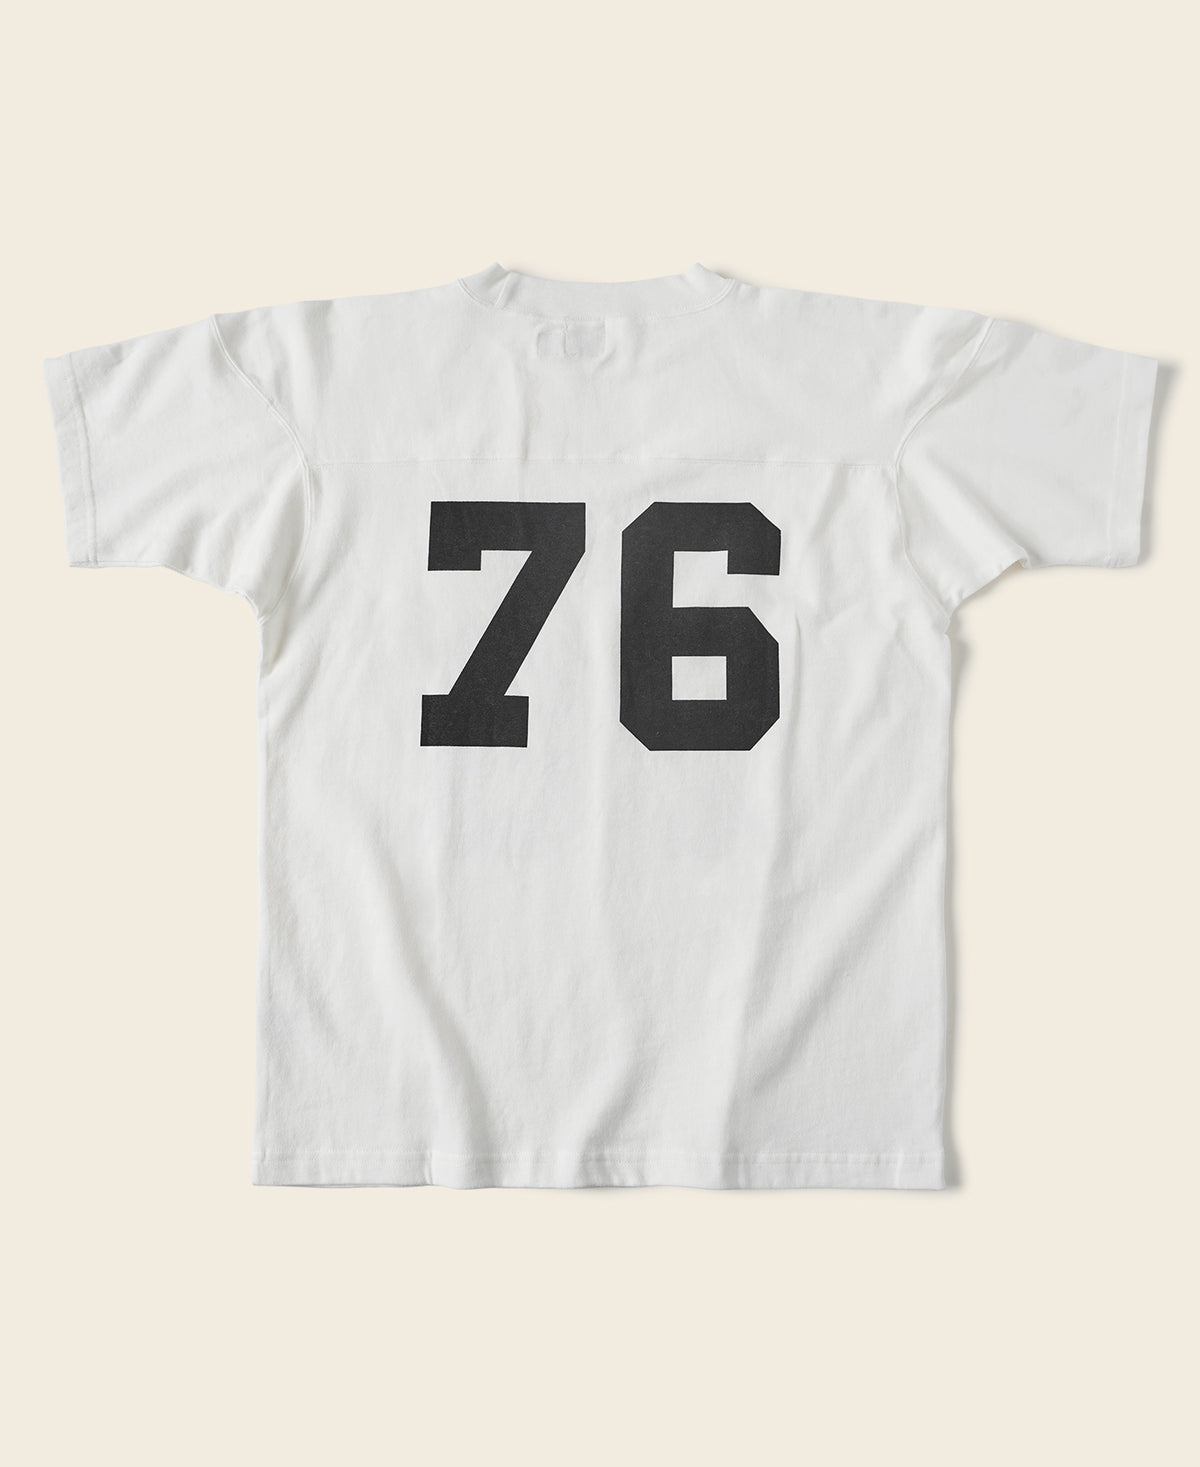 US Naval Football T-Shirt - White